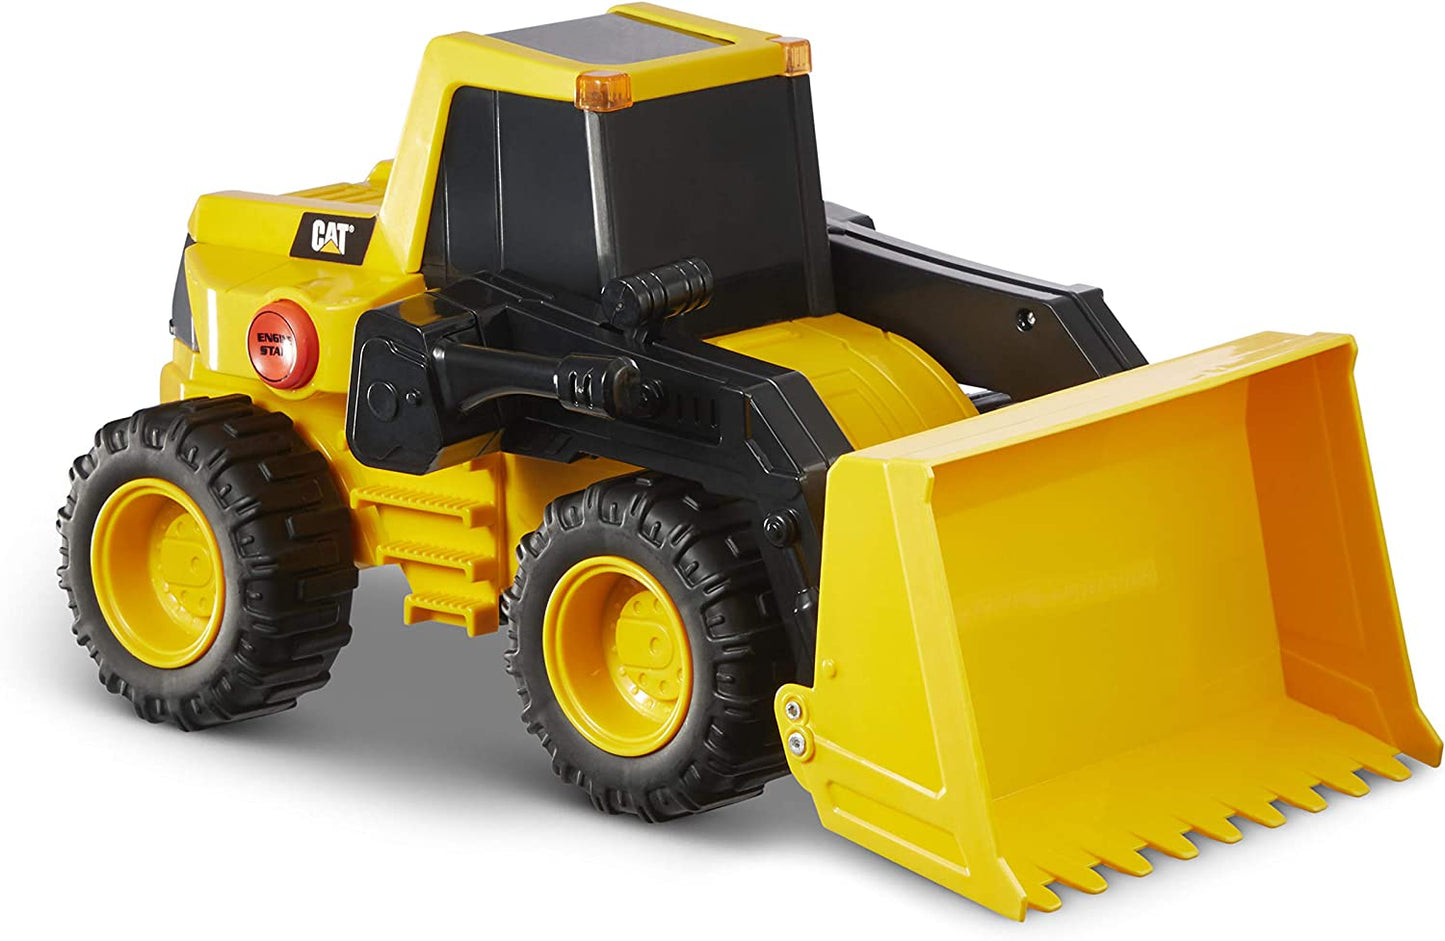 Cattoysofficial Construction Power Haulers Dump Truck, Yellow